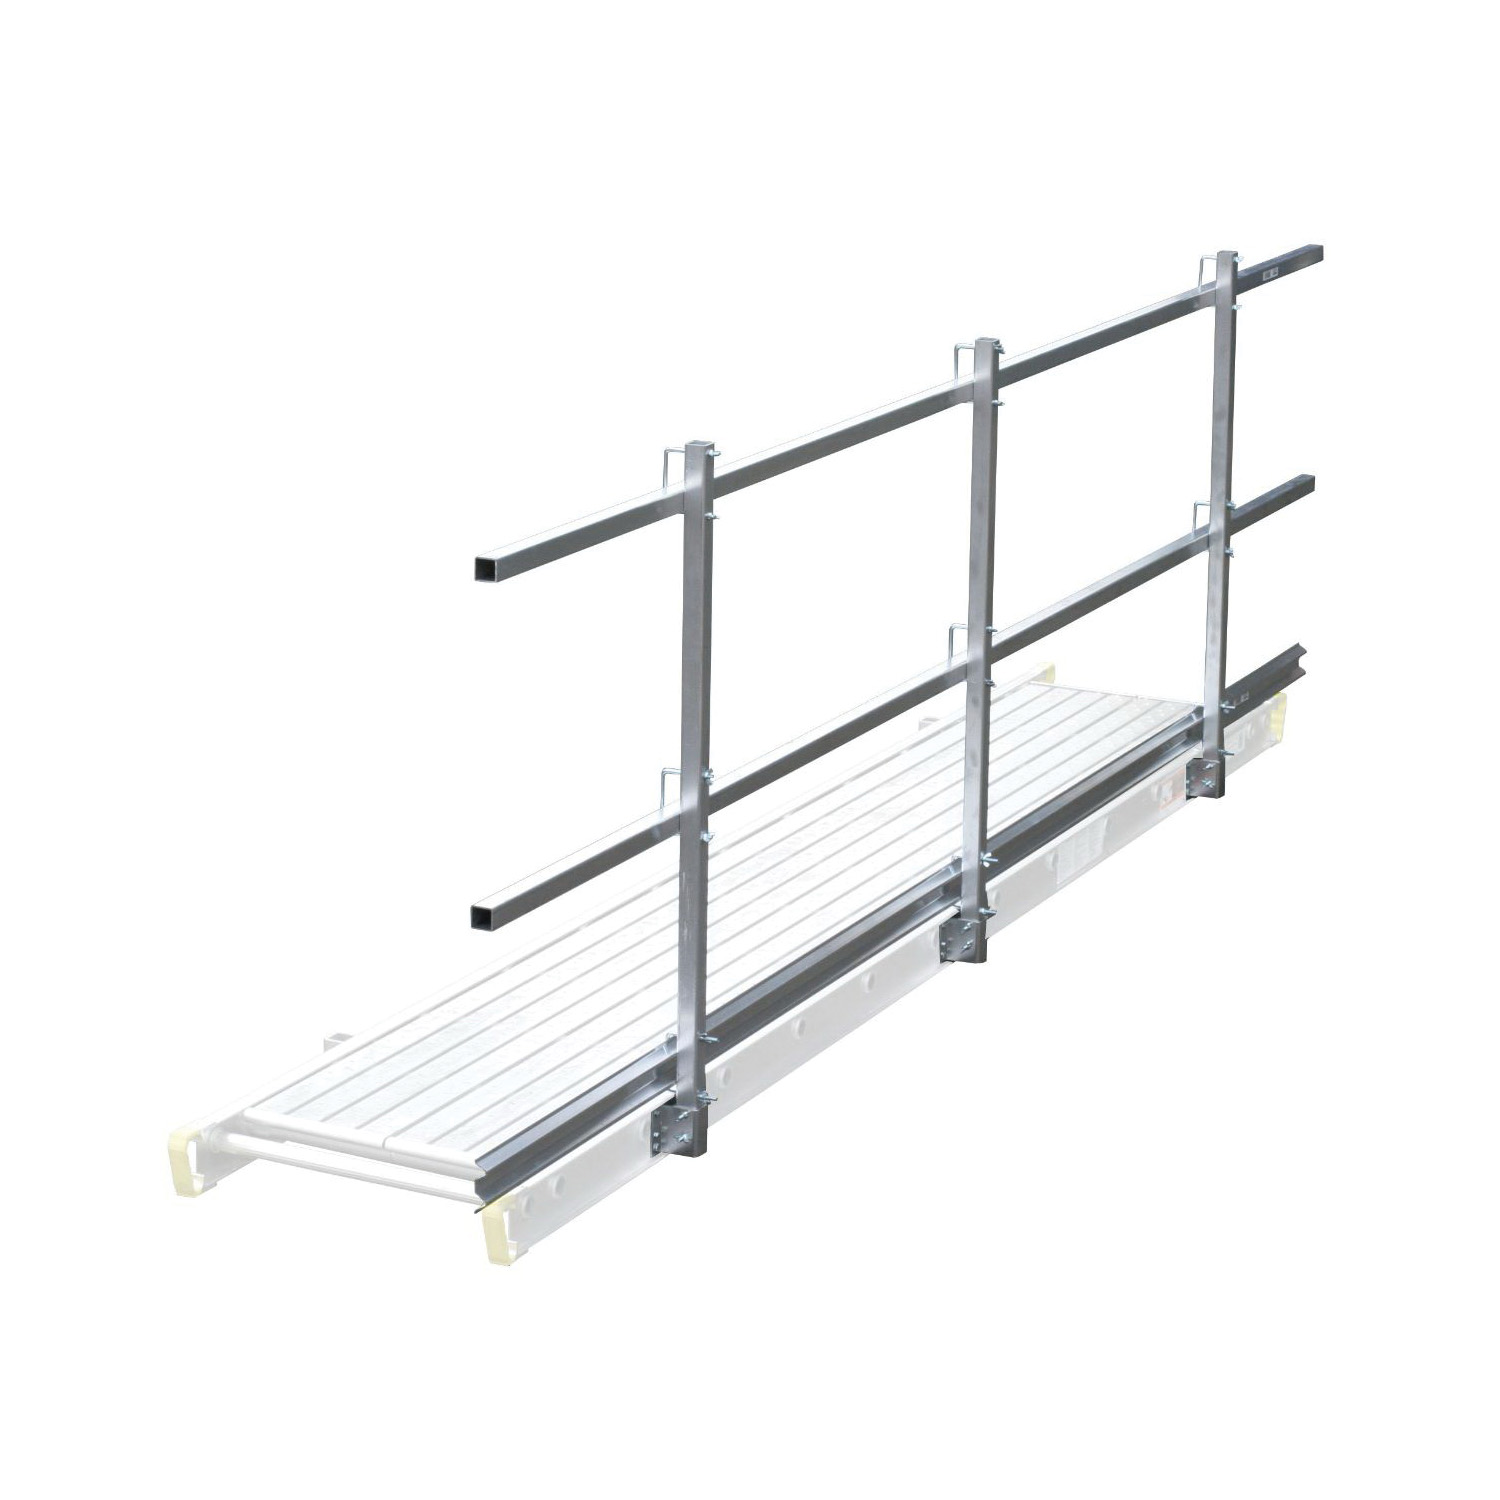 WERNER® PD6203 PD6200 Podium Ladder, 5 ft Ladder, 300 lb Load, 3 Steps, Type IA, Fiberglass